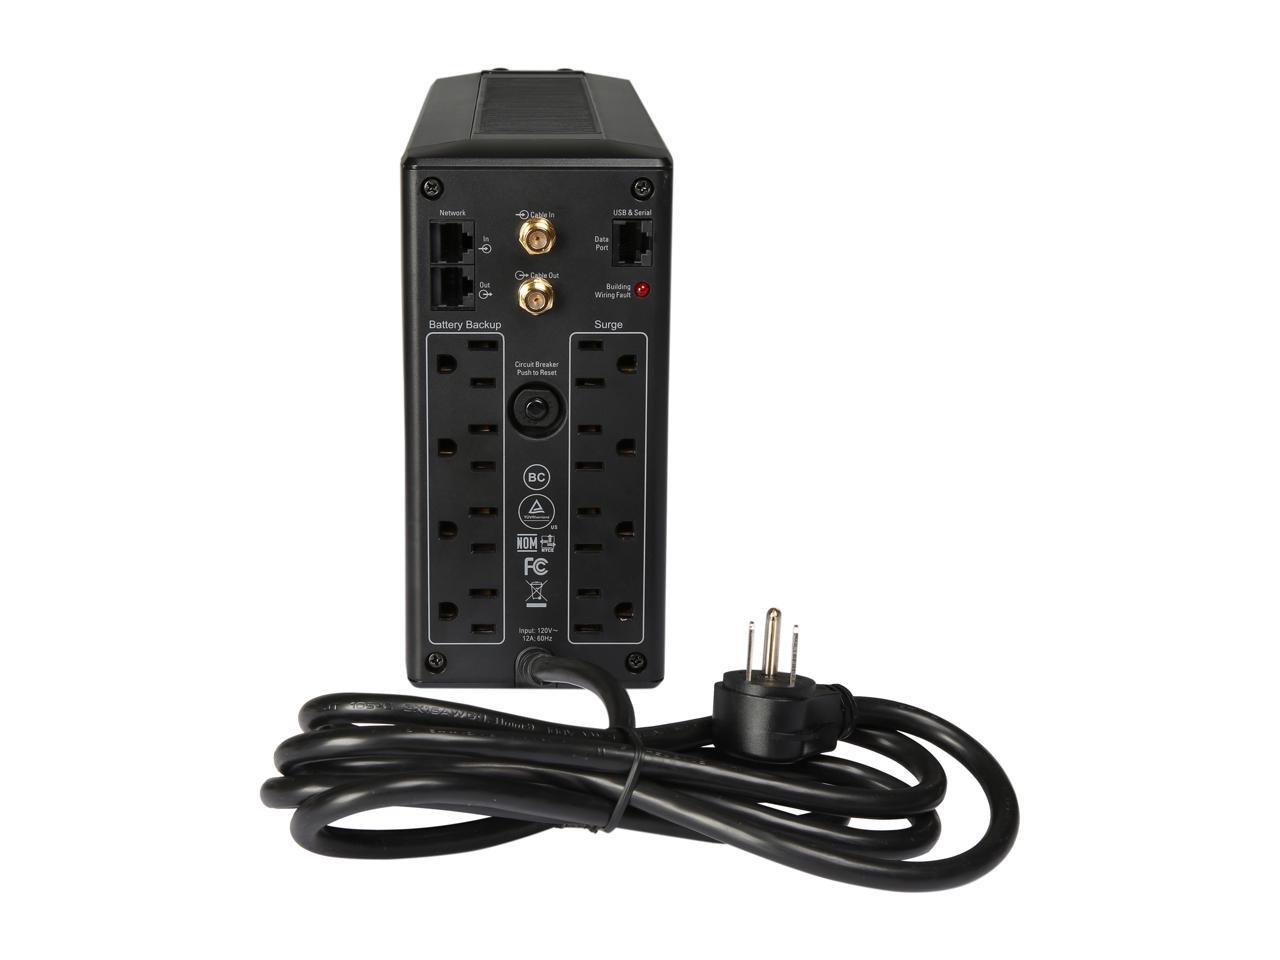 APC BX850M Back-UPS Pro 850 VA 510 Watts 8 Outlets Uninterruptible Power Supply (UPS)